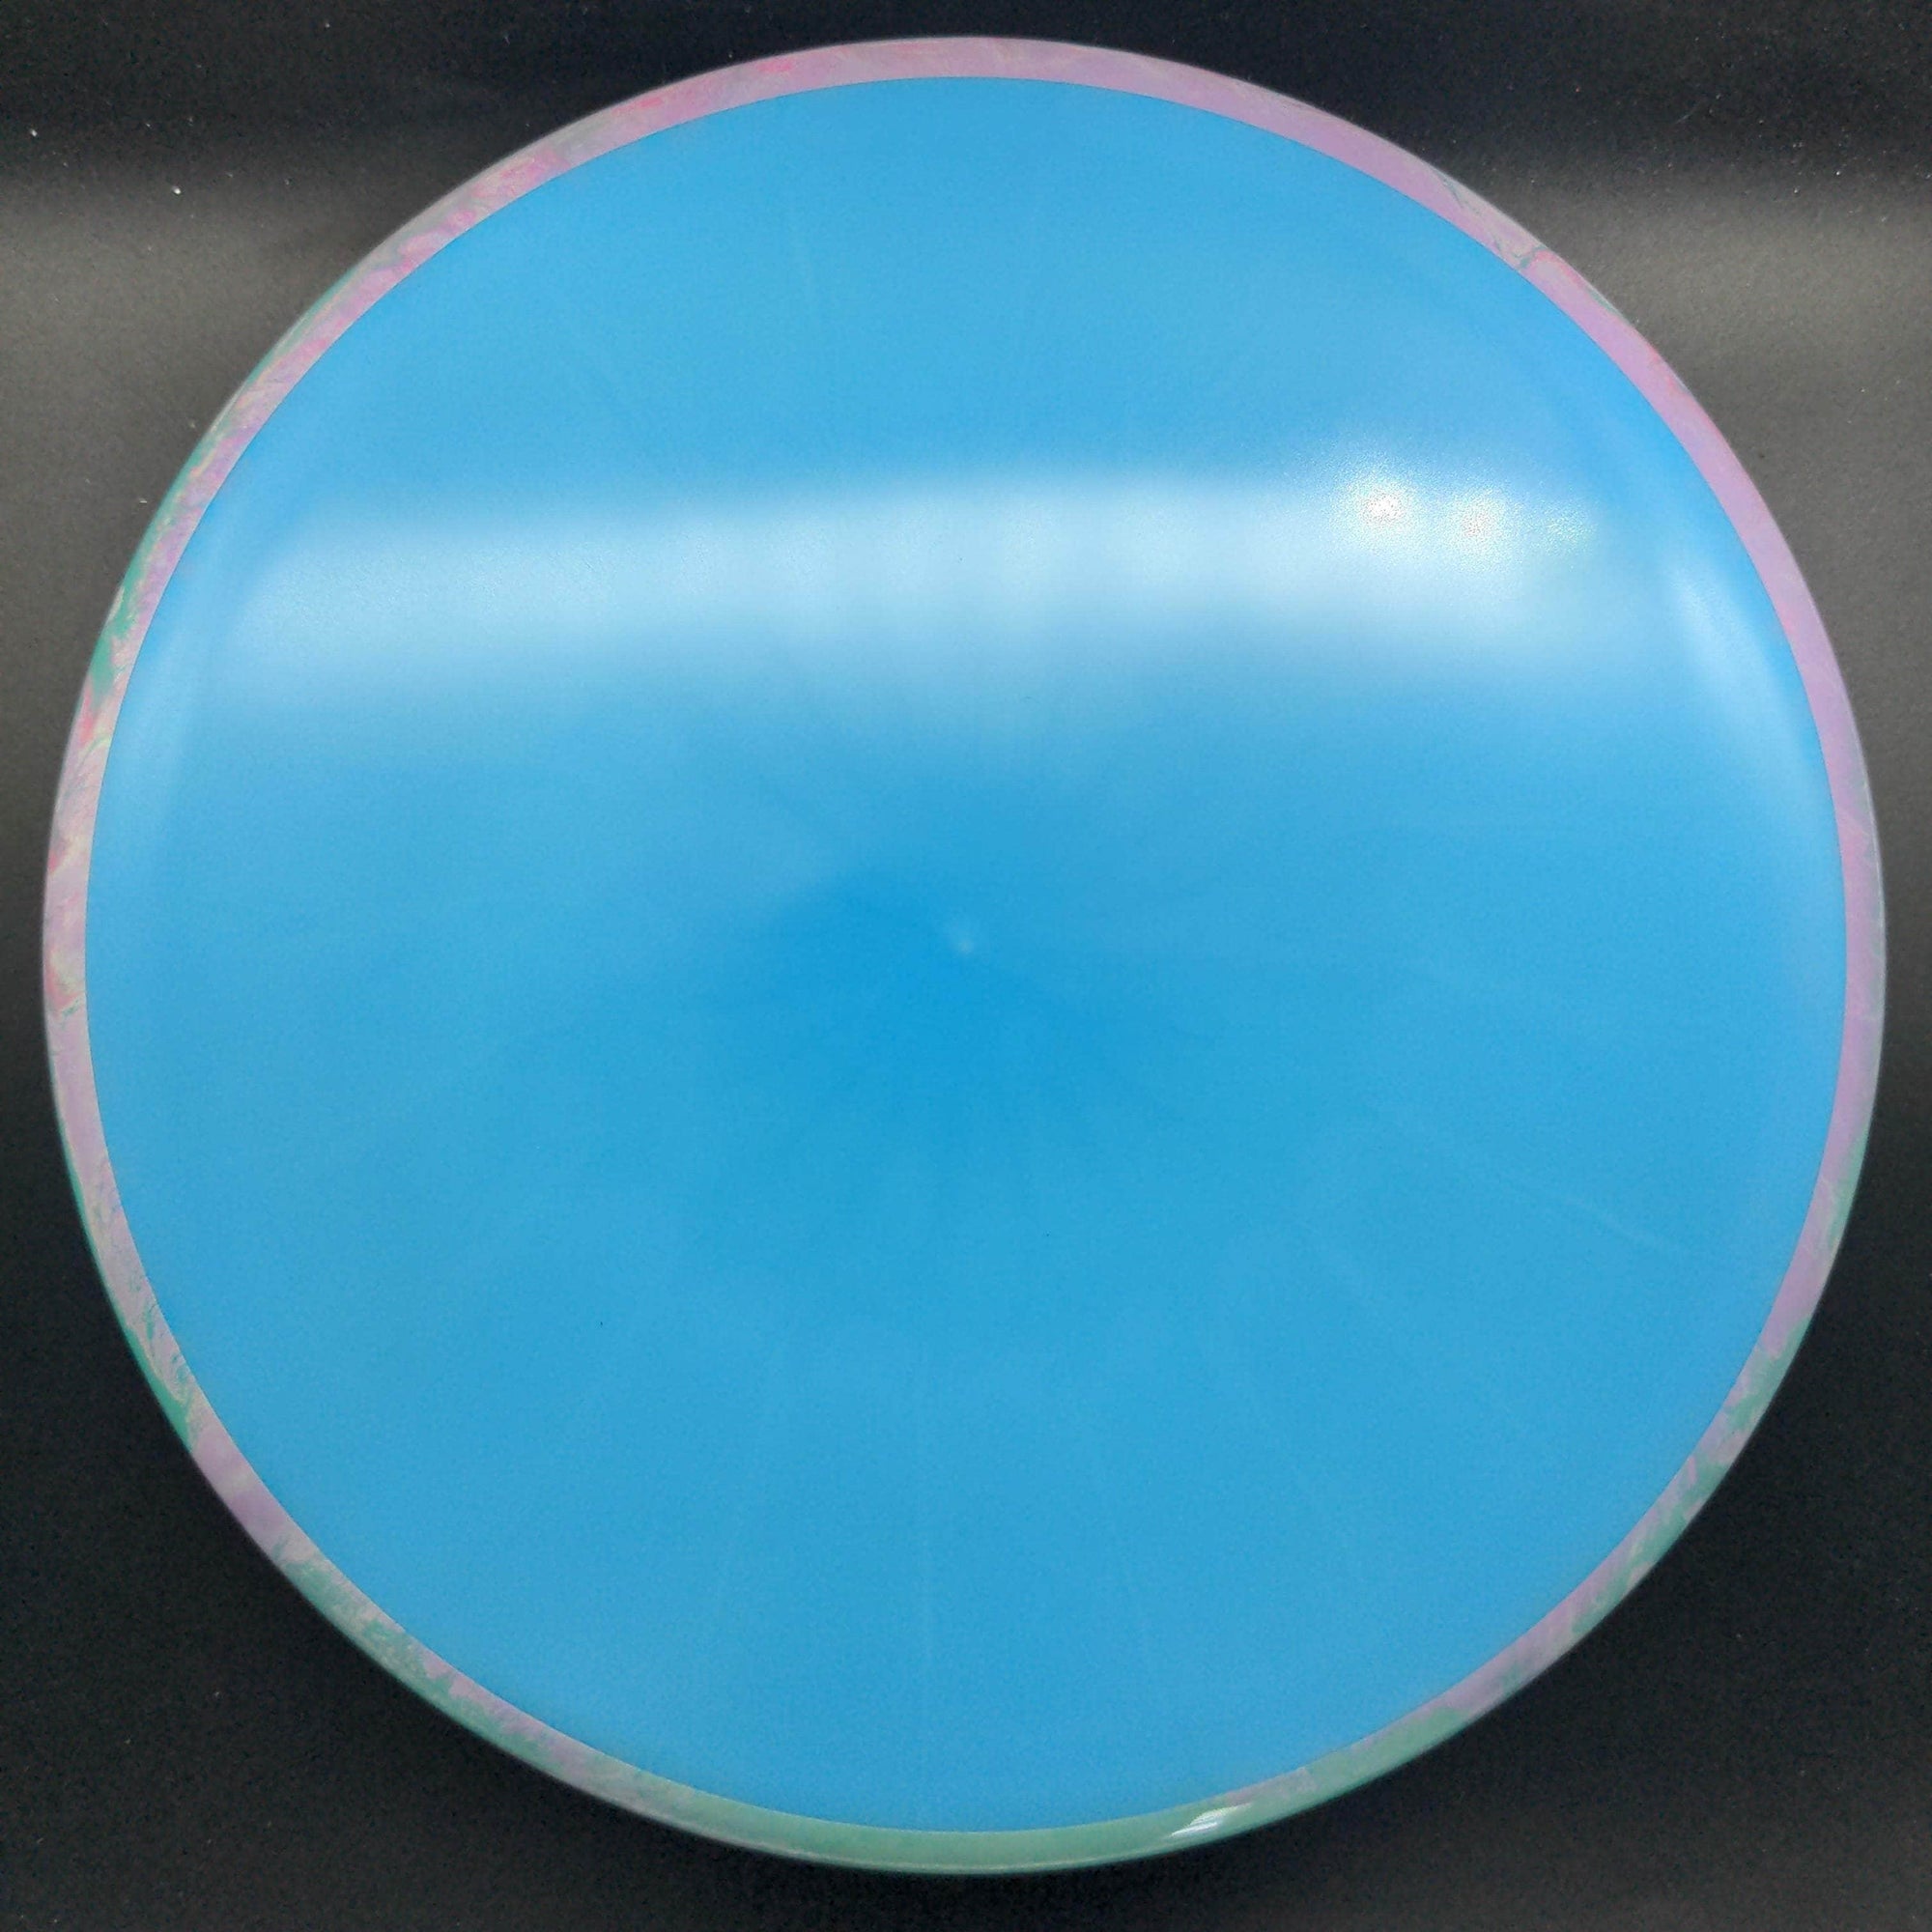 MVP Mid Range Teal/Pink Swirl Rim Blue Blank Plate 177g Hex, Fission Plastic,